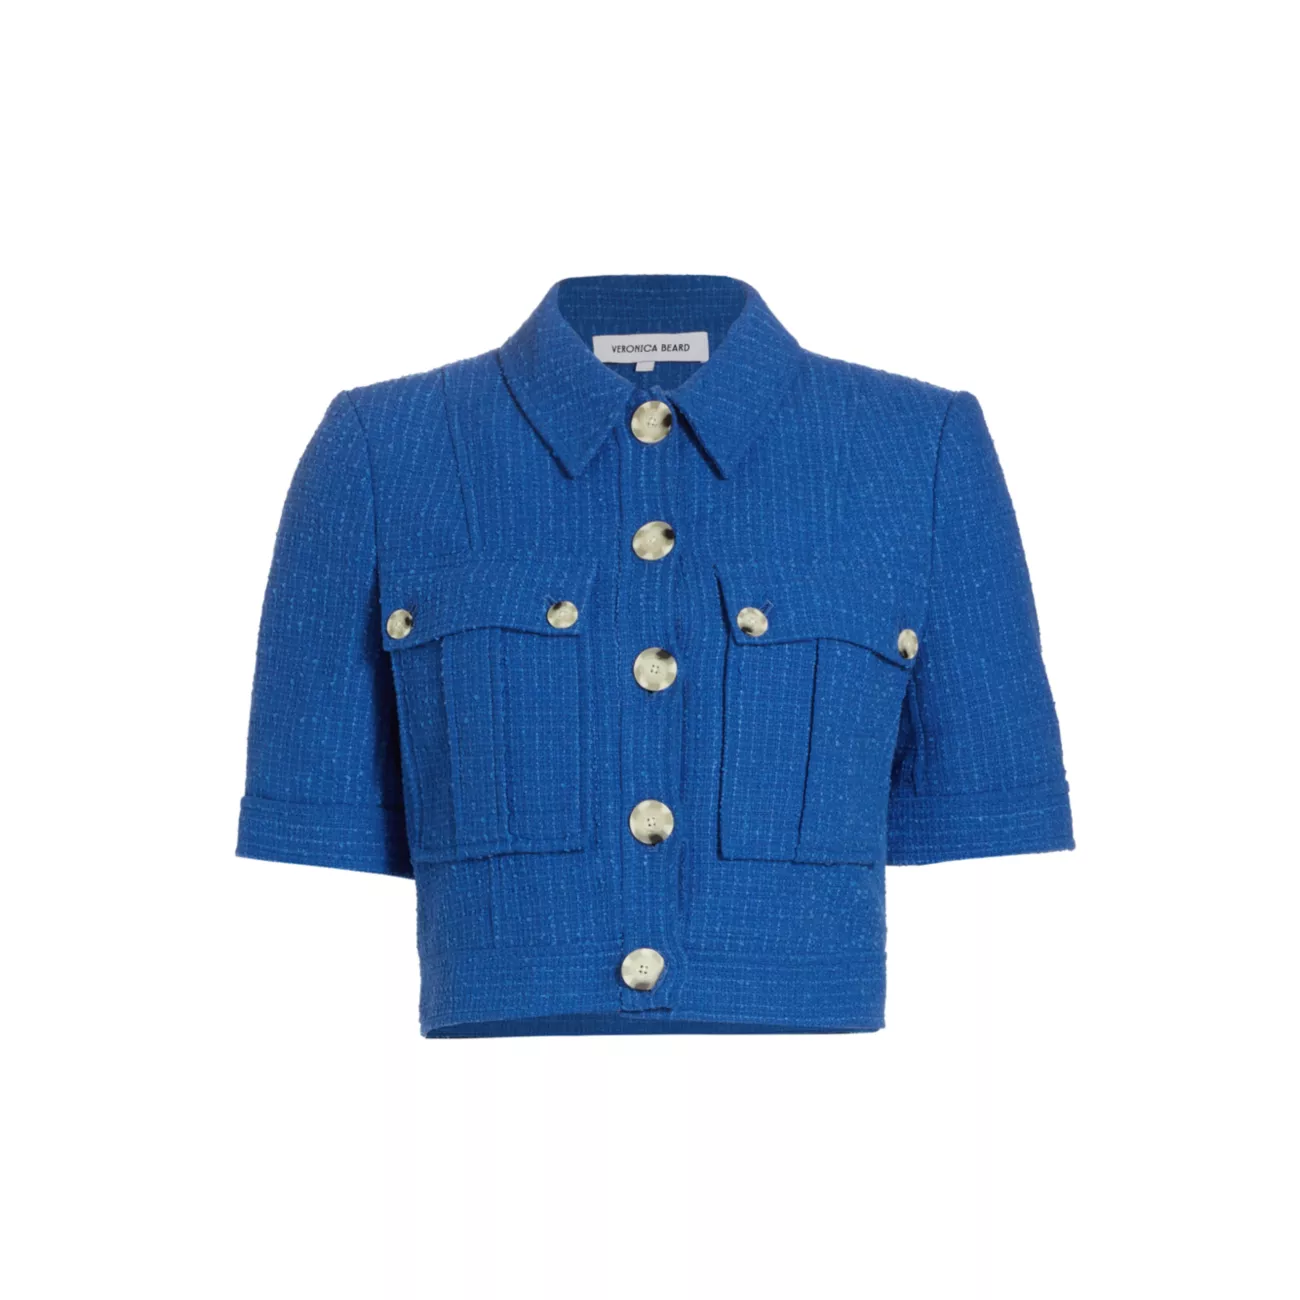 Rosalina Cotton-Blend Tweed Crop Jacket VERONICA BEARD